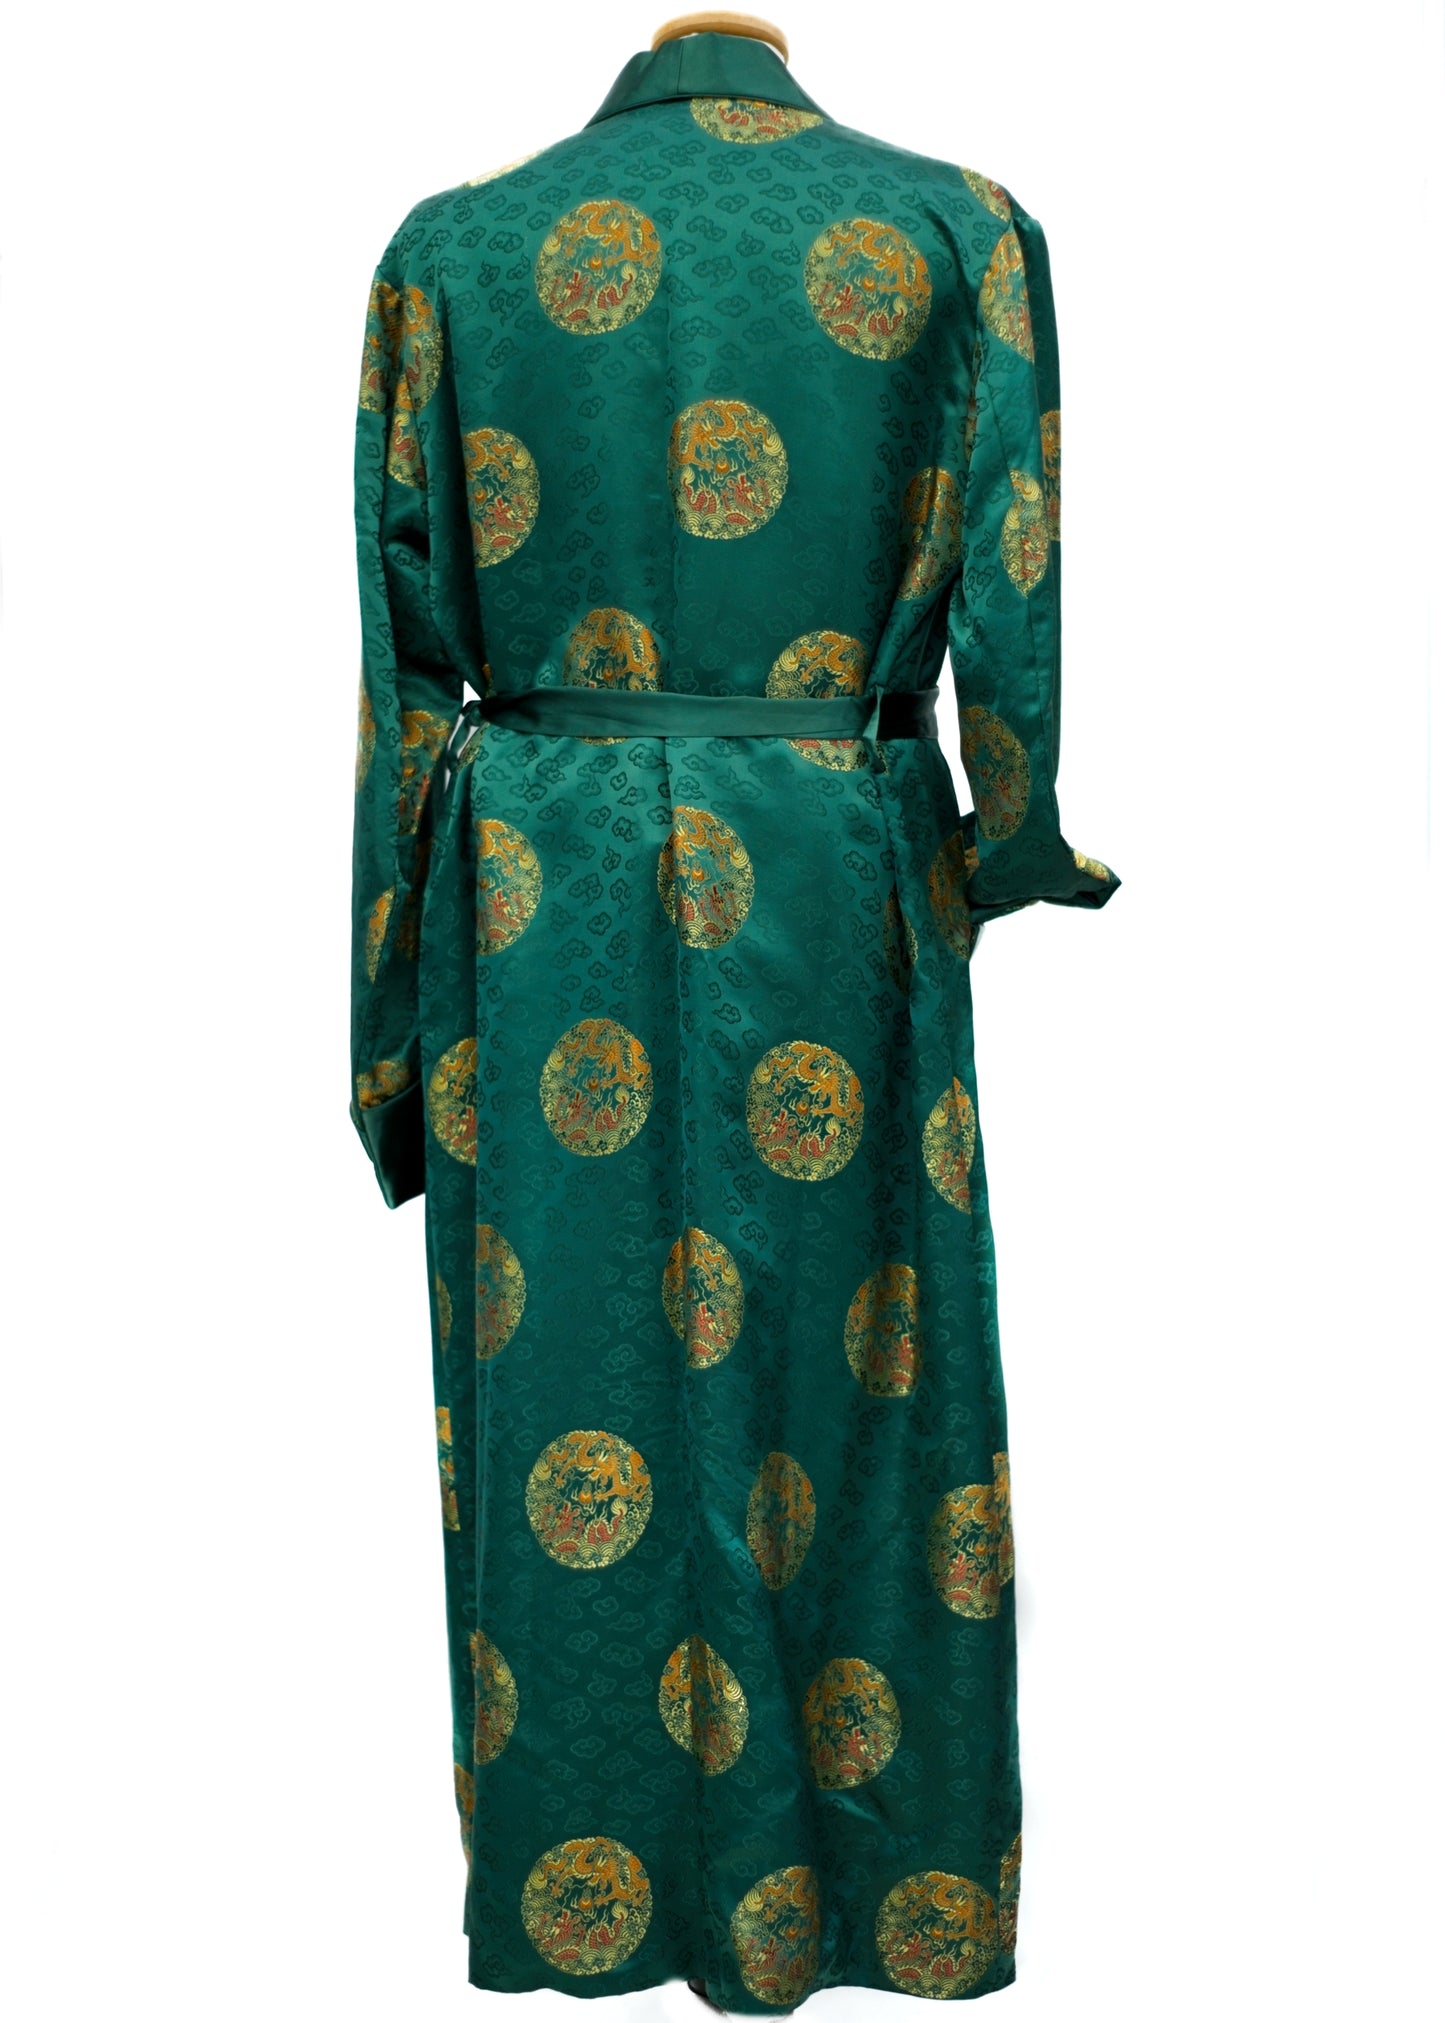 Vintage Men's Green Satin Brocade Gold Dragon Robe Dressing Gown